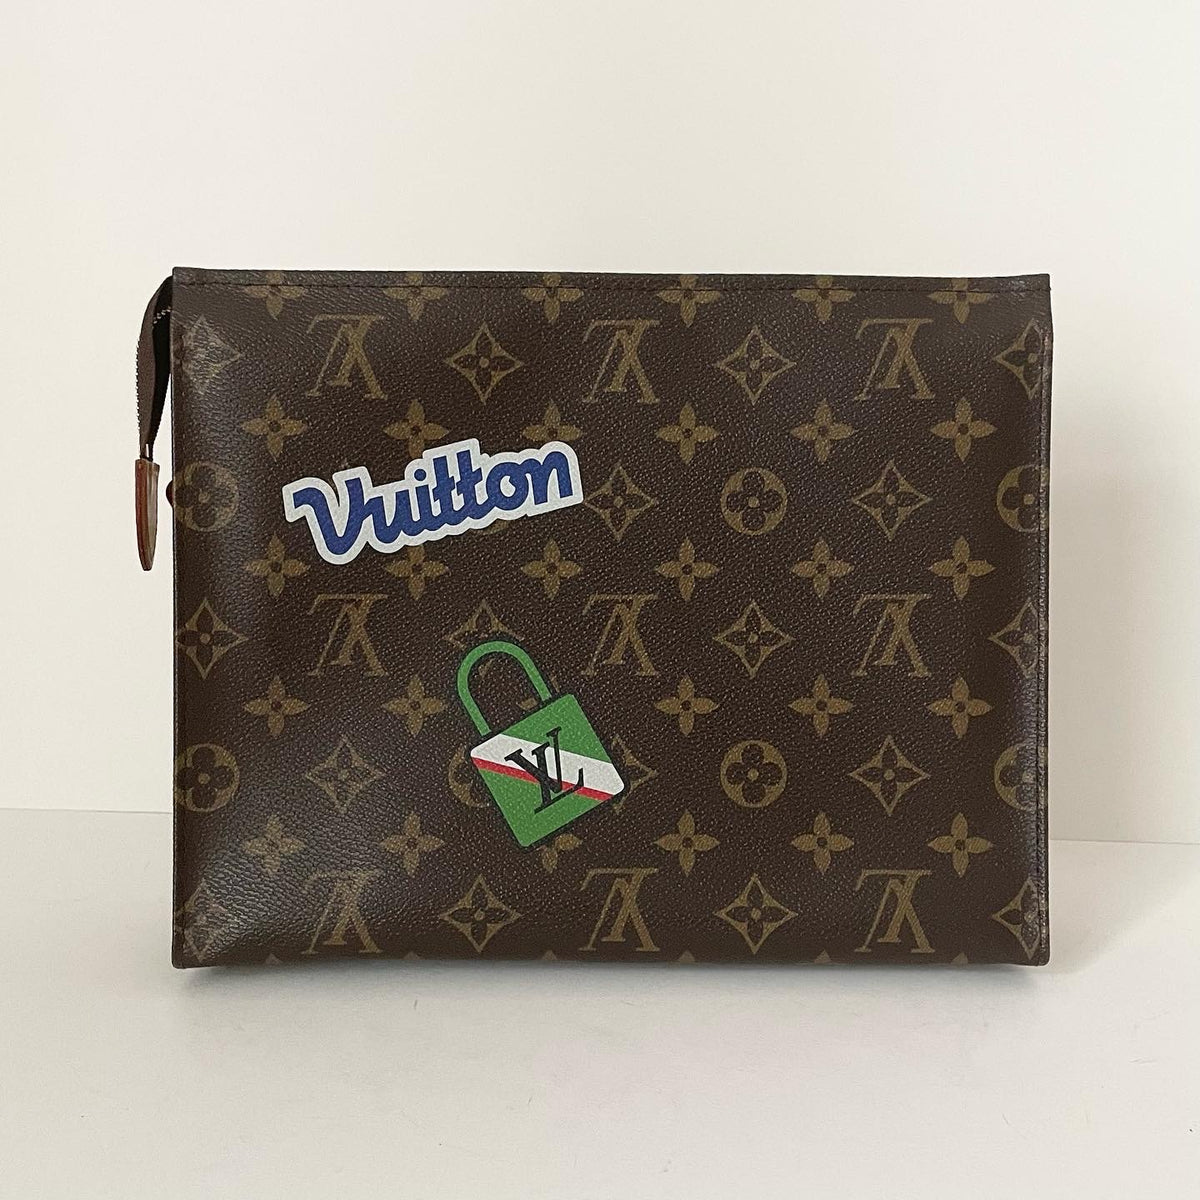 Louis Vuitton Monogram Bag - 1,629 For Sale on 1stDibs  louis vuitton  monogram canvas price, lv monogram bag, monogram lv